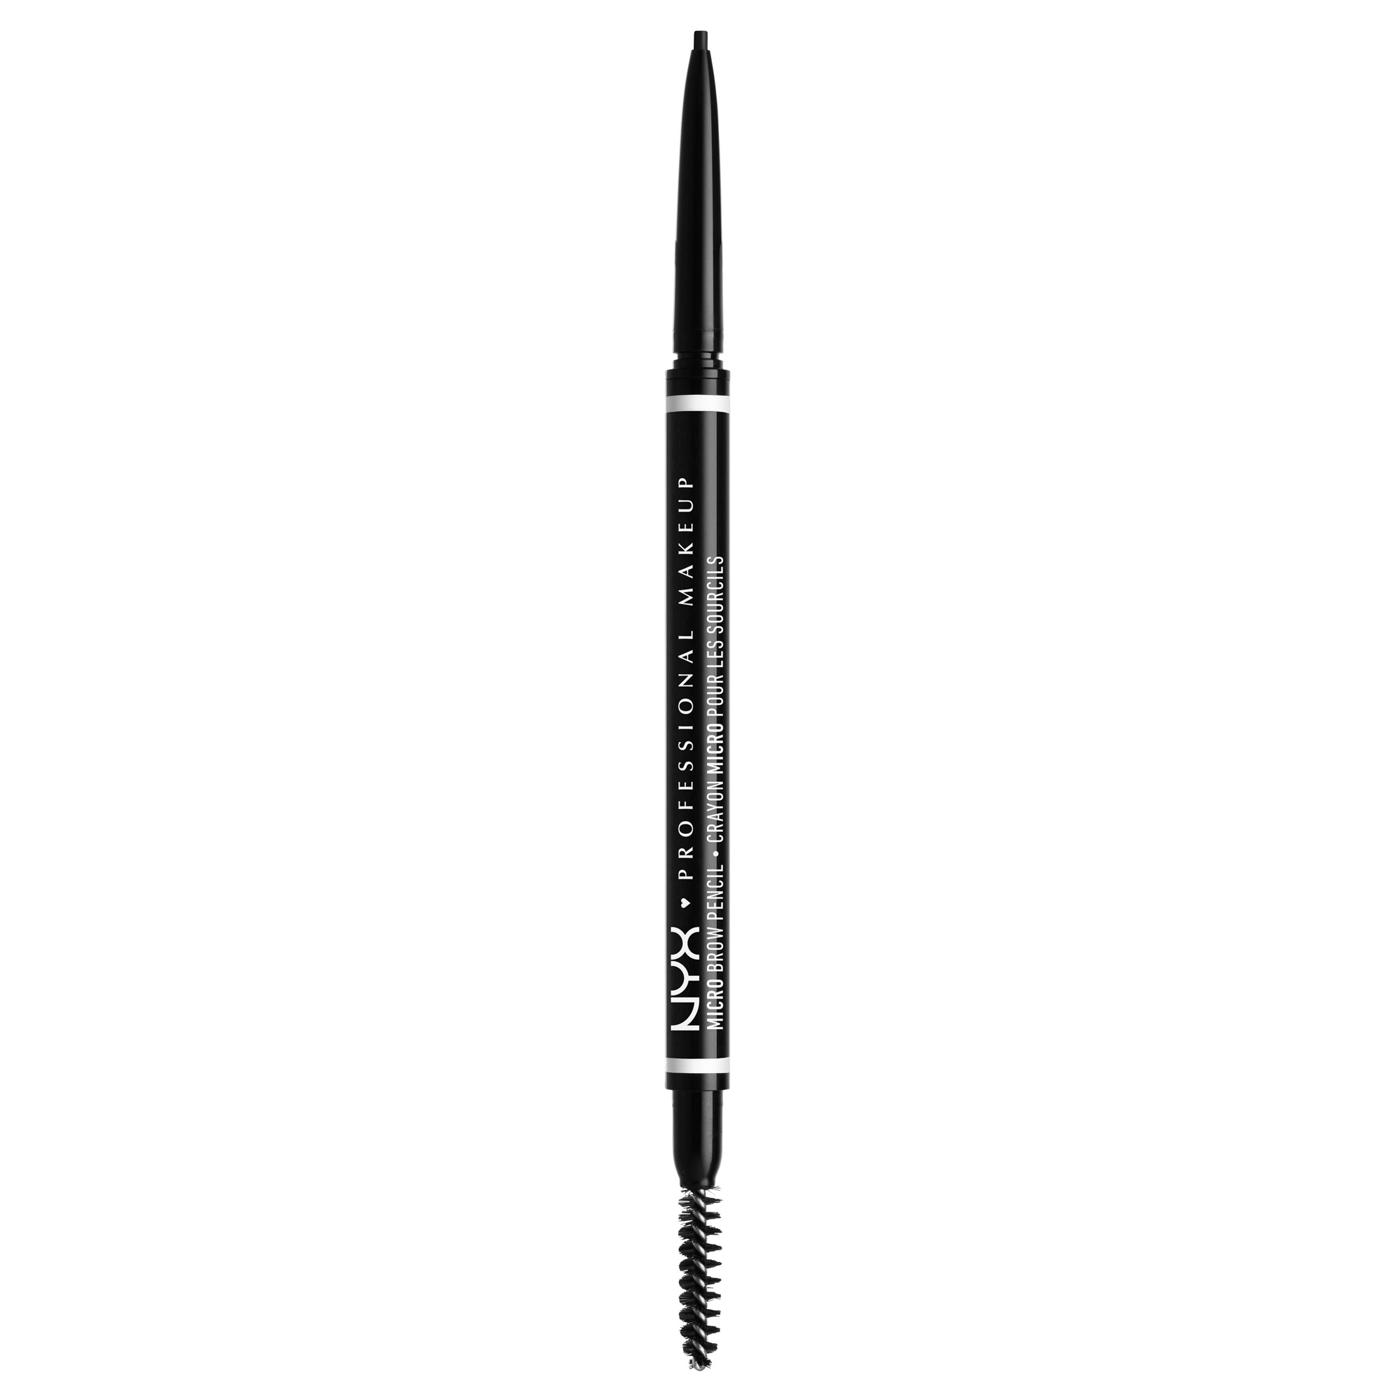 NYX Micro Brow Pencil - Black; image 1 of 3